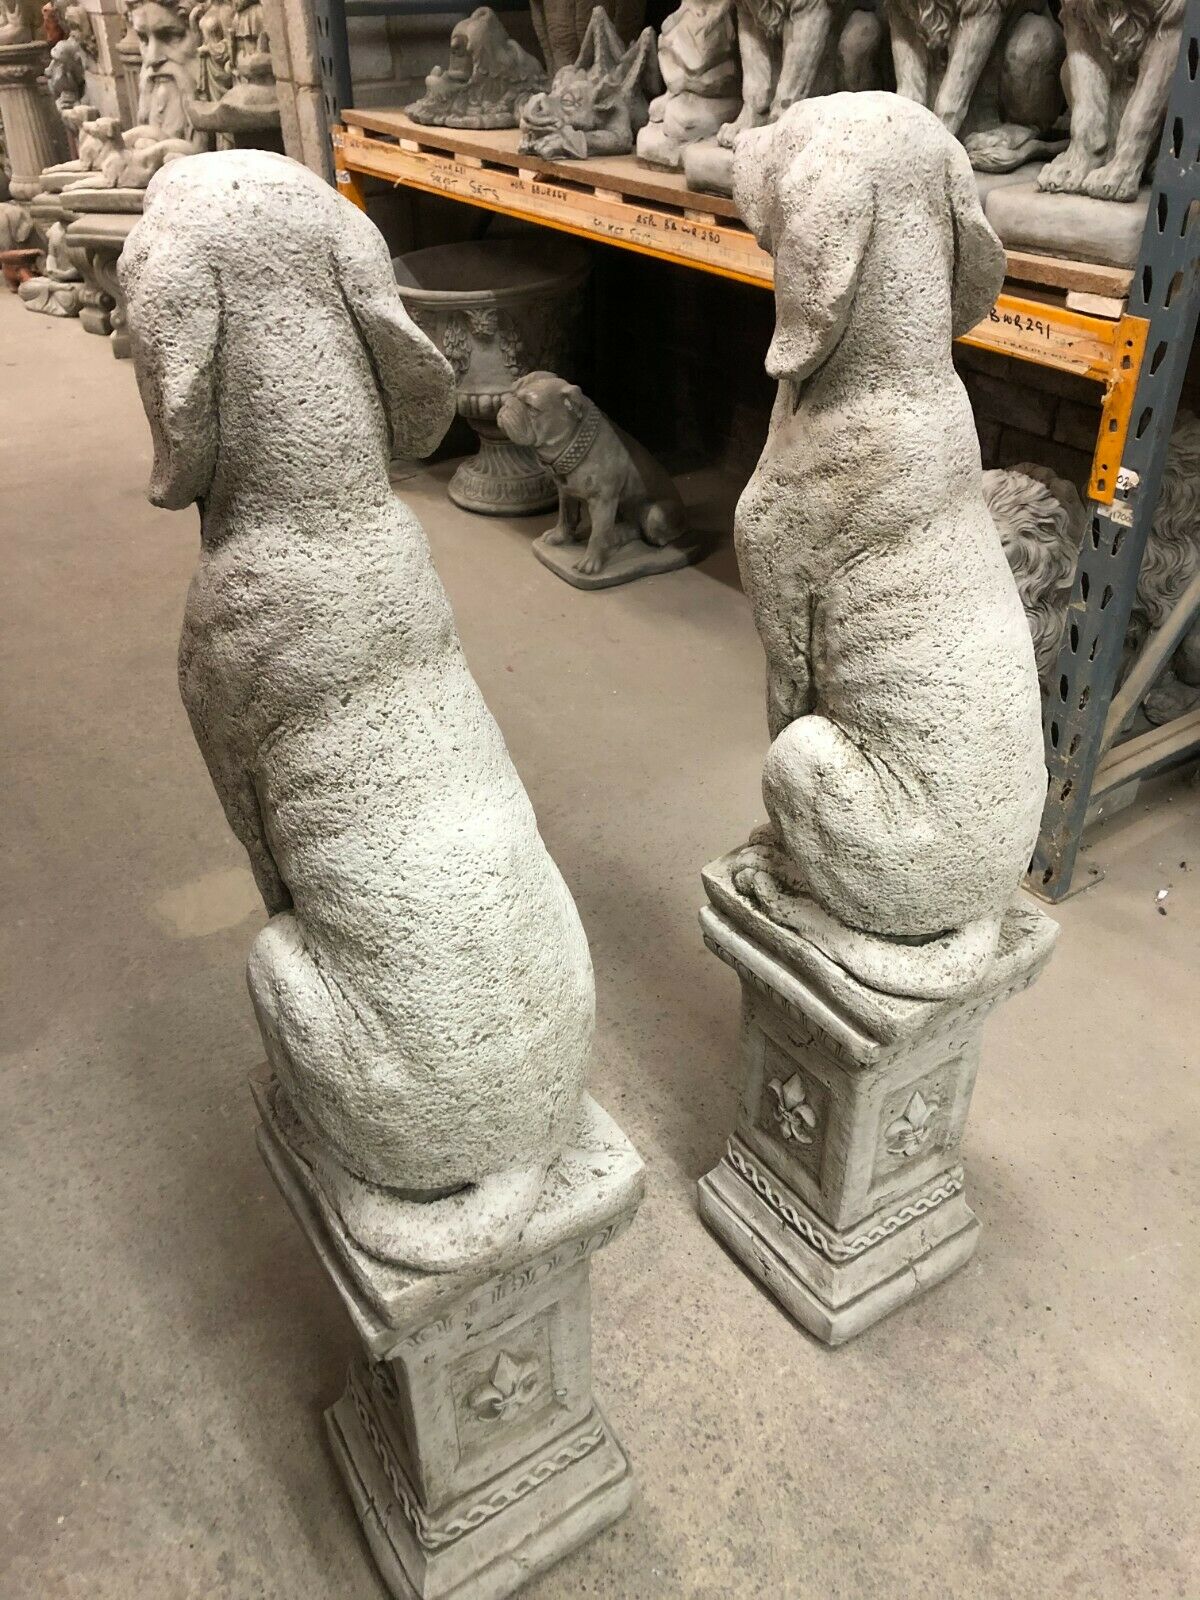 Pair of Stone Hound Dog Statues